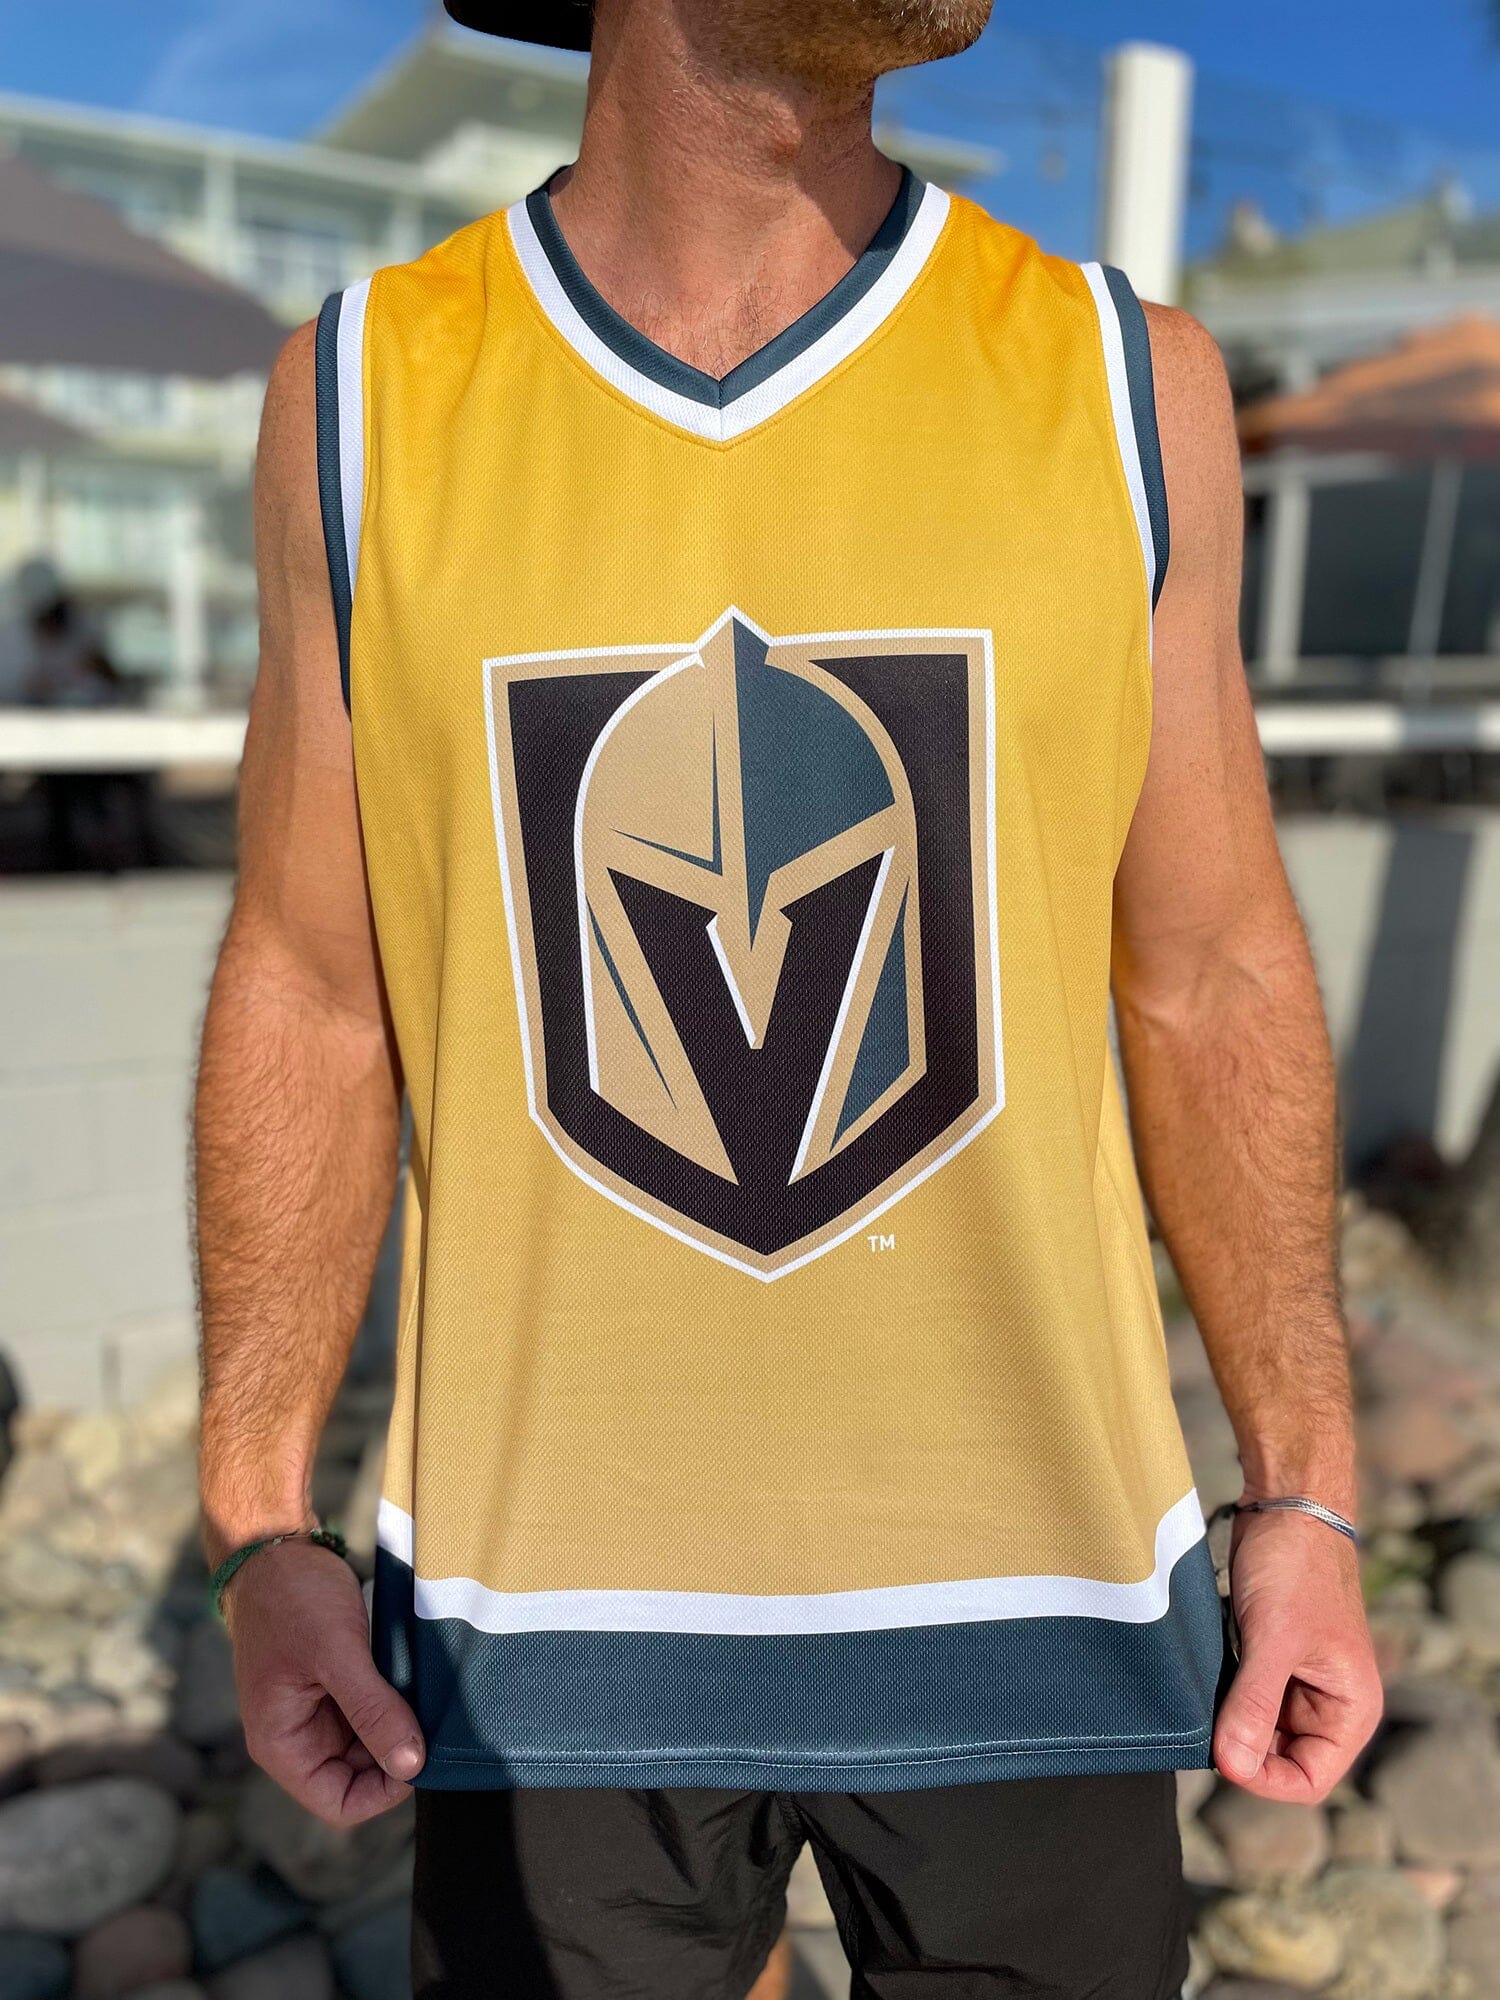 NHL Tank Tops, NHL Sleeveless Shirts, Tanks